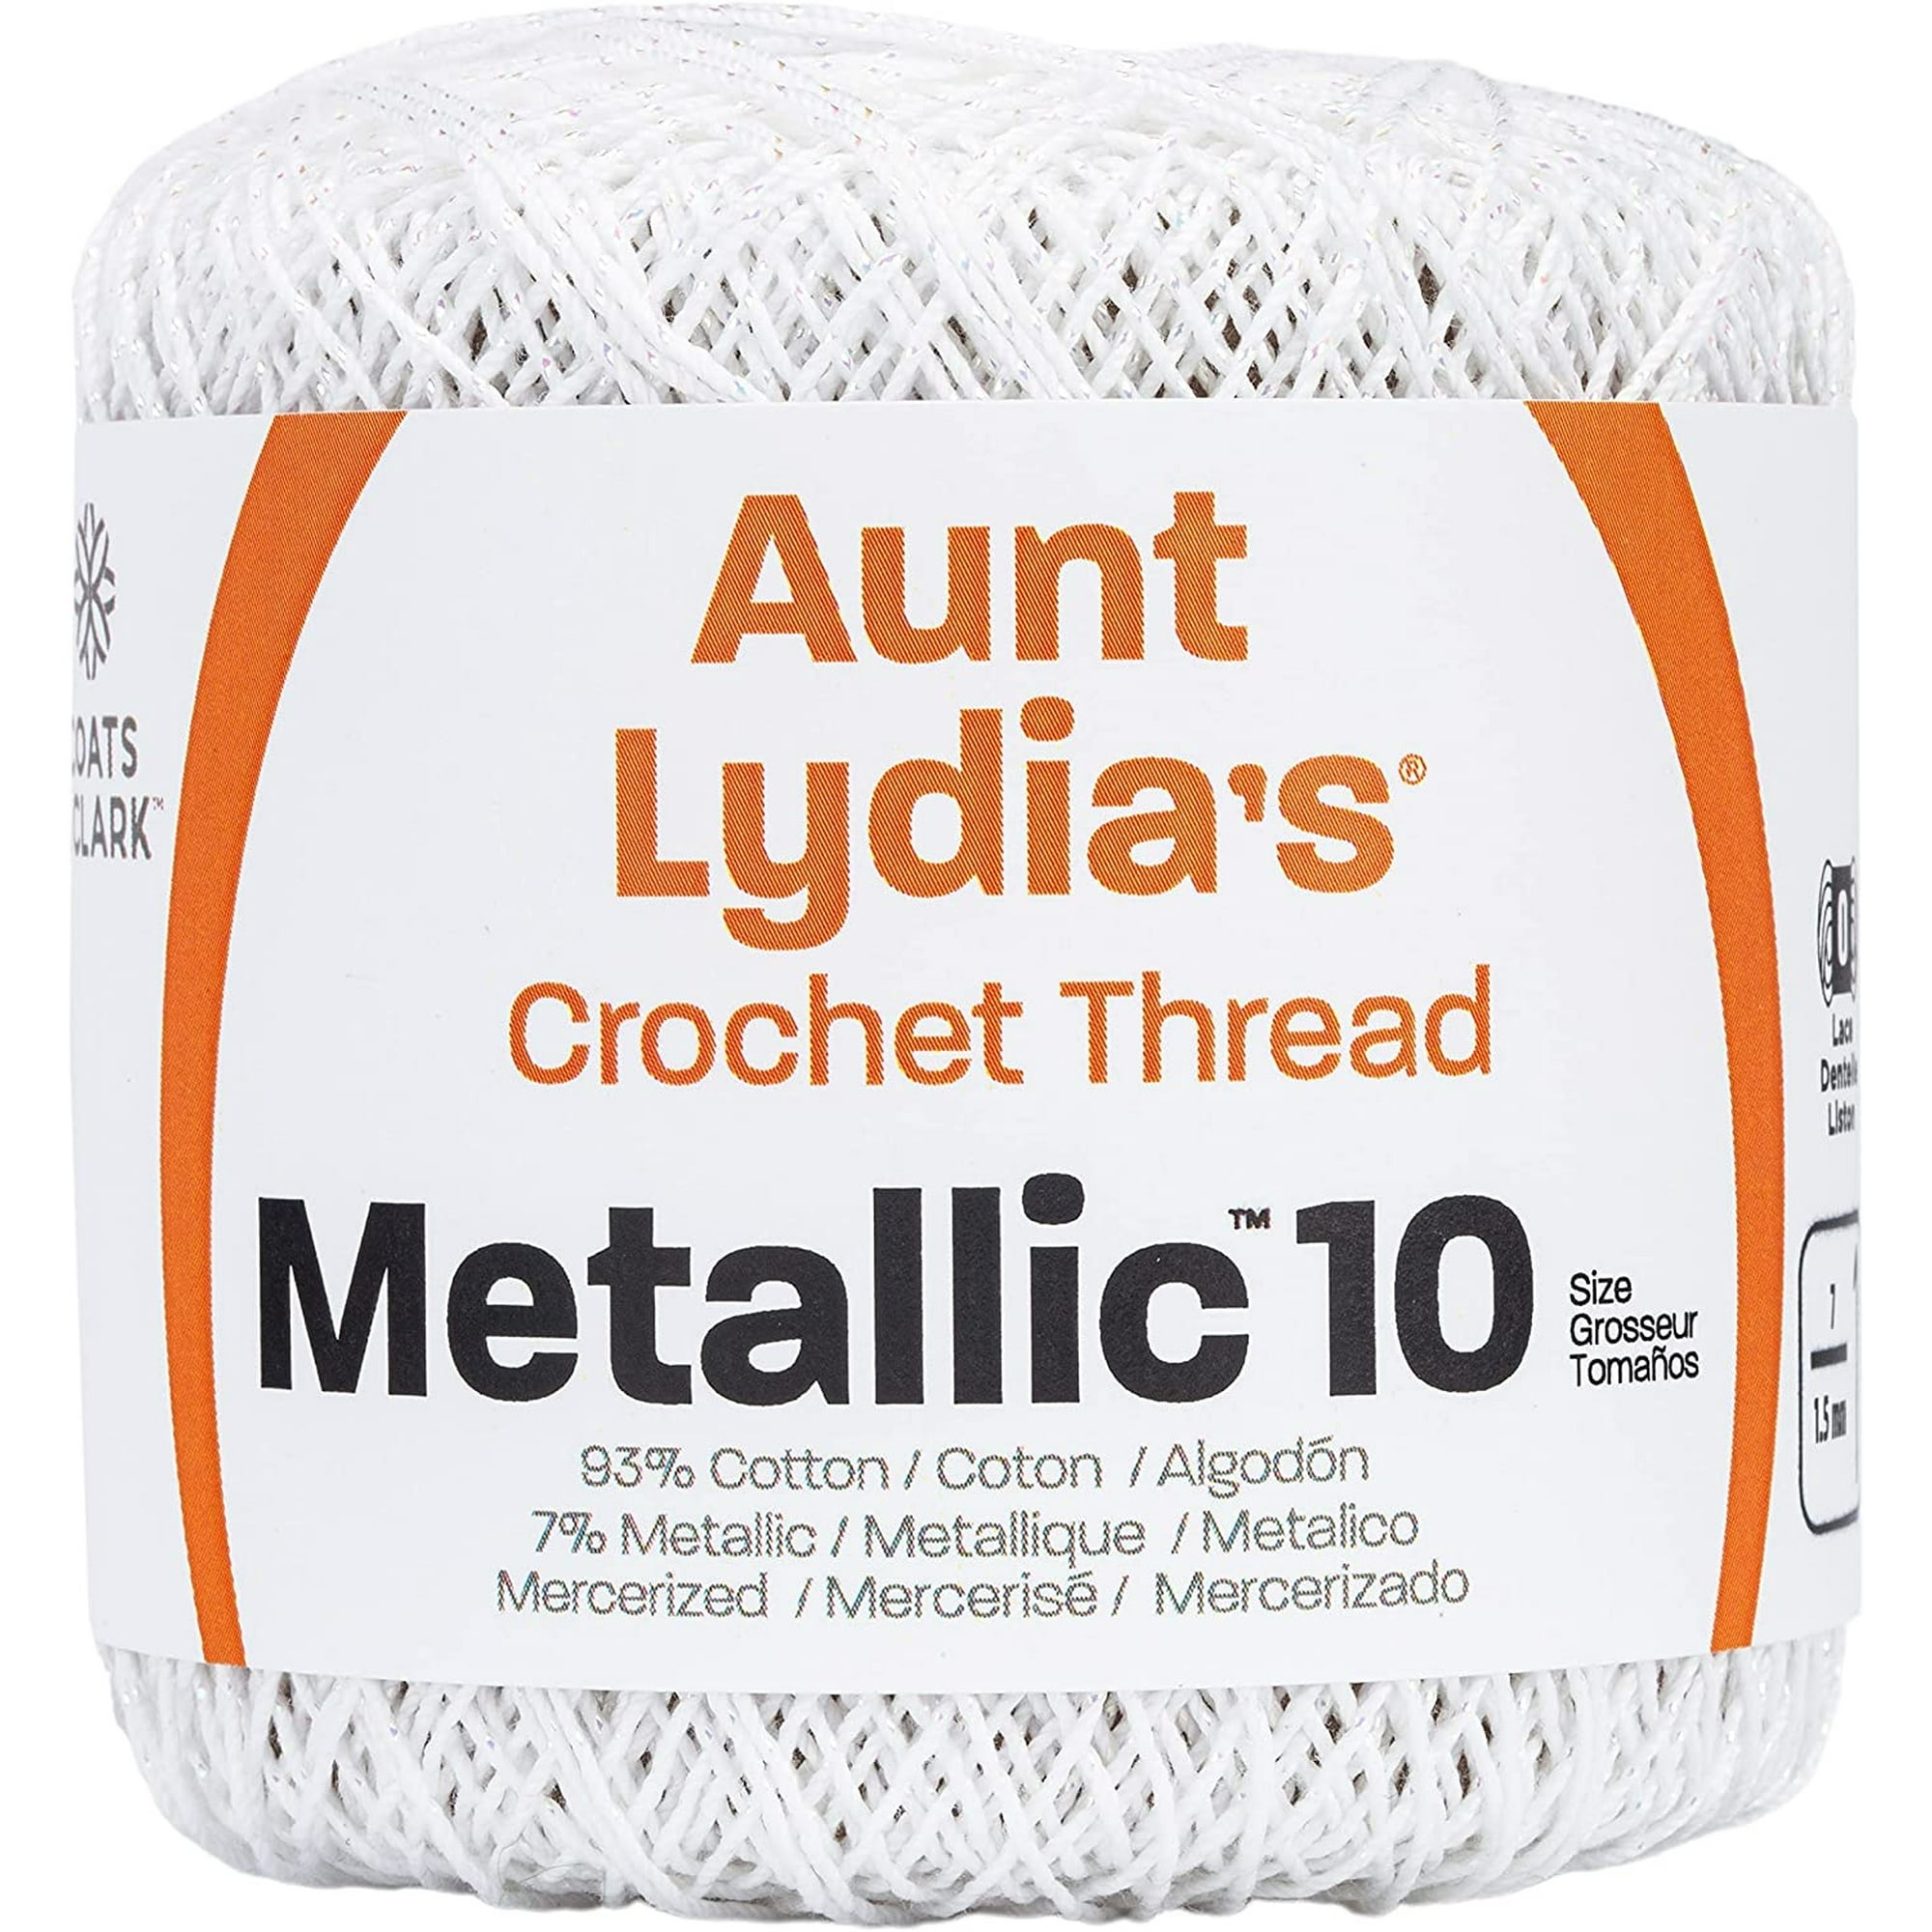 Aunt Lydia's Classic Crochet Thread Size 10 - Antique White